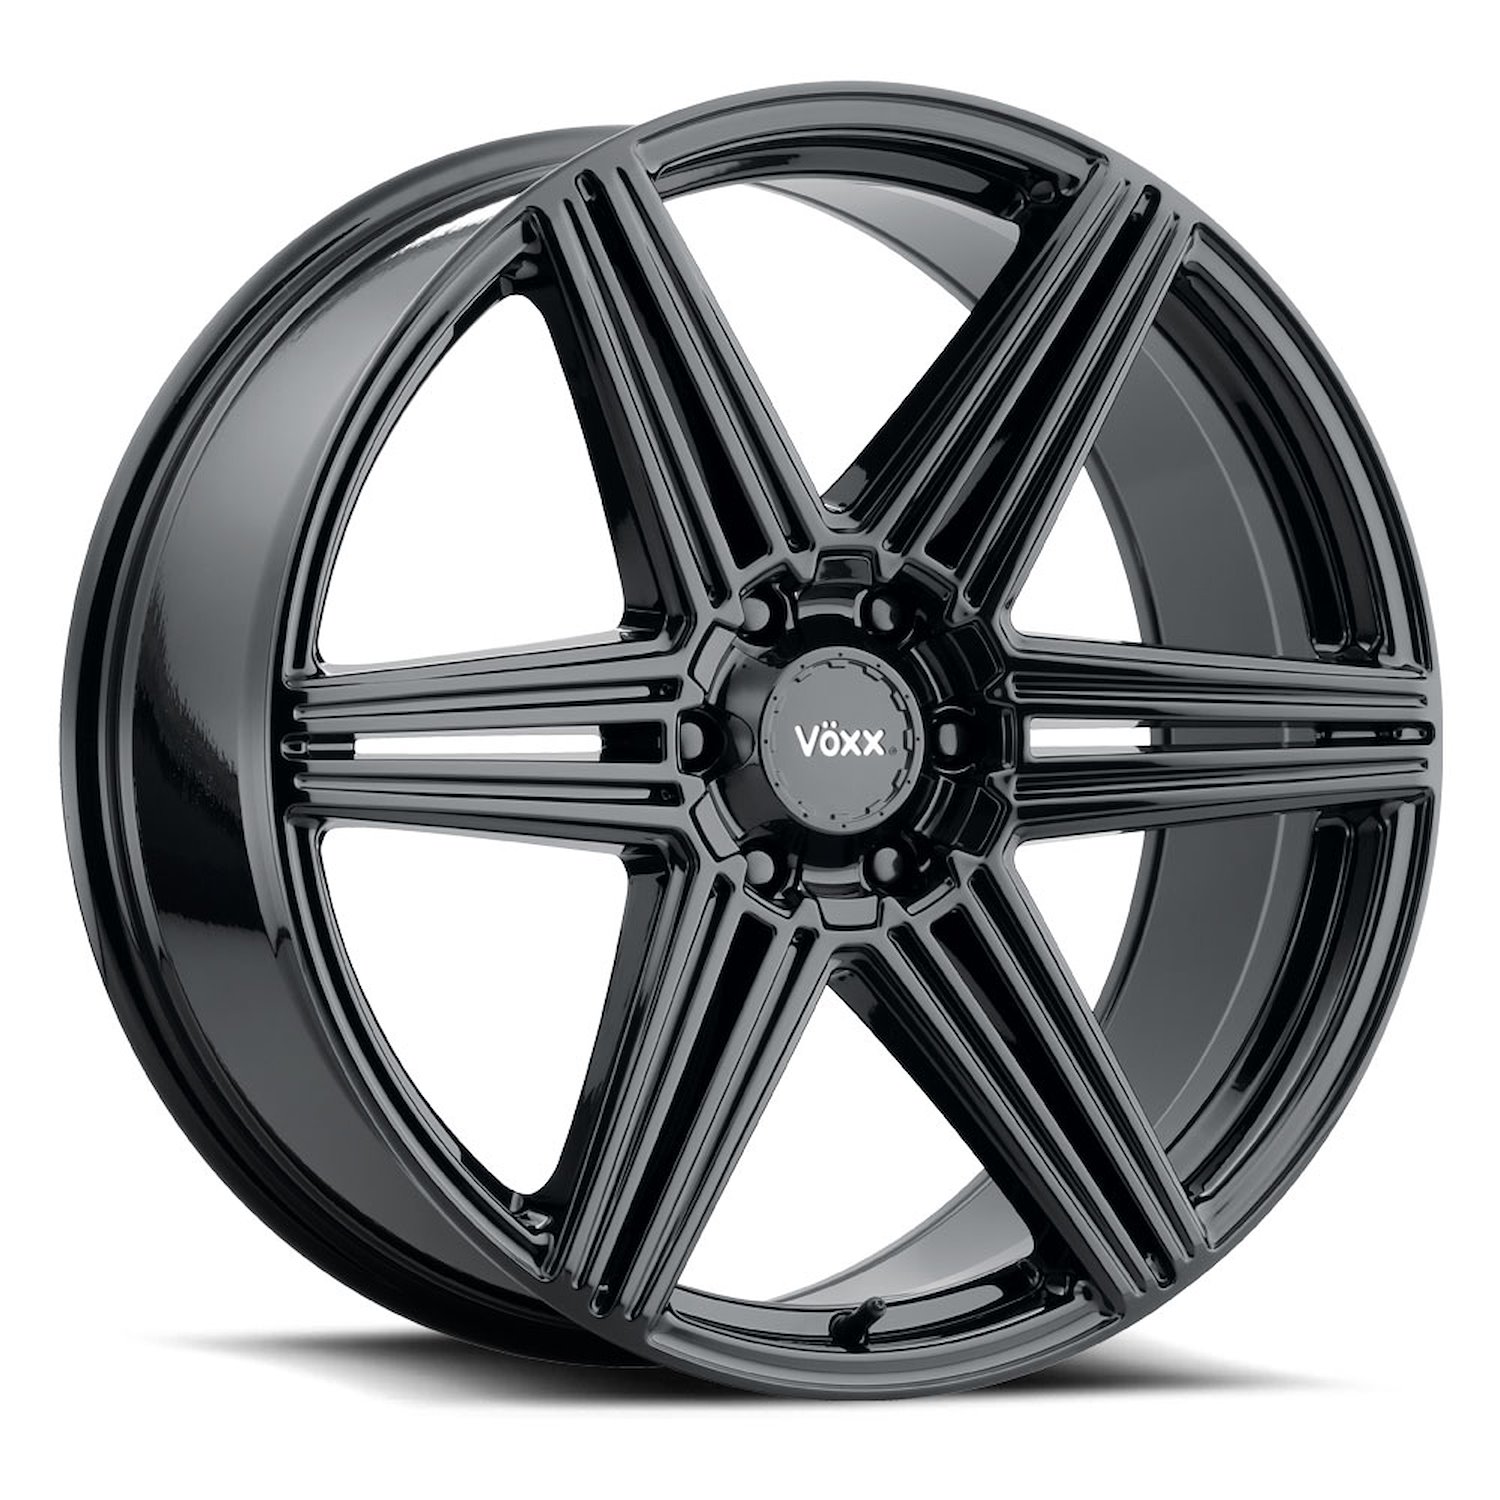 SOT 885-6002-39 GB Sotto Wheel [Size: 18" x 8.50"] Finish: Gloss Black